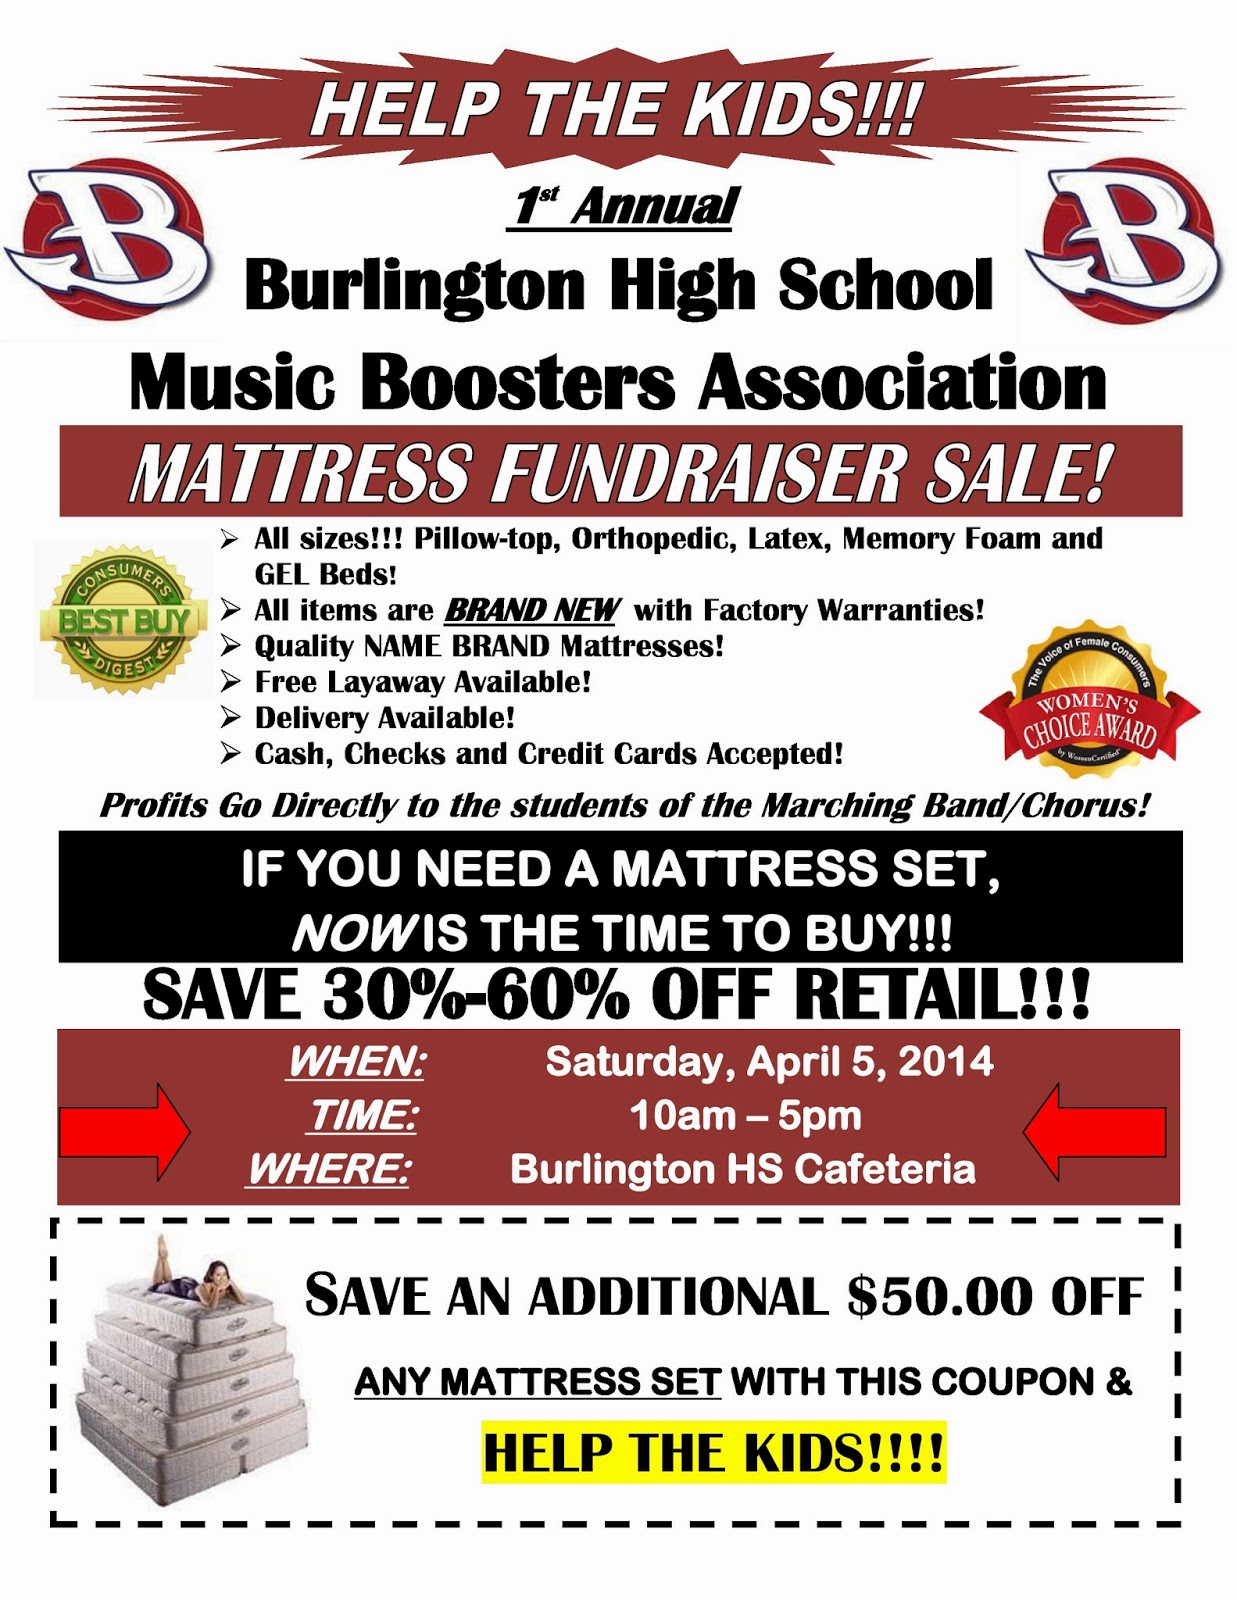 ... School Principal's Blog: BHS Music Boosters Association Fundraiser